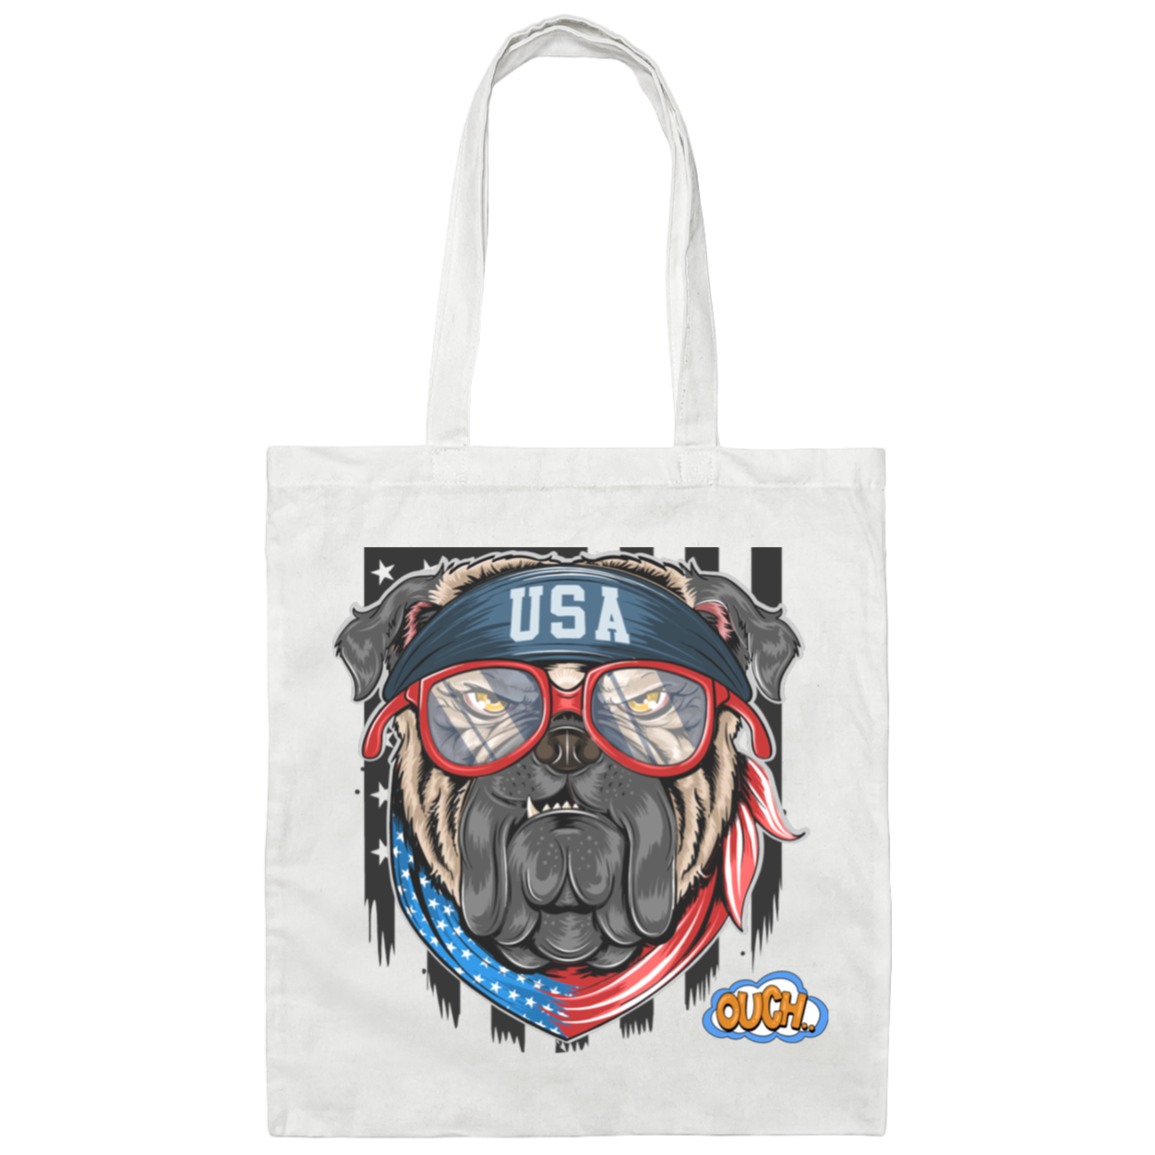 USA DOG-OUCH-100% Cotton Canvas Bag